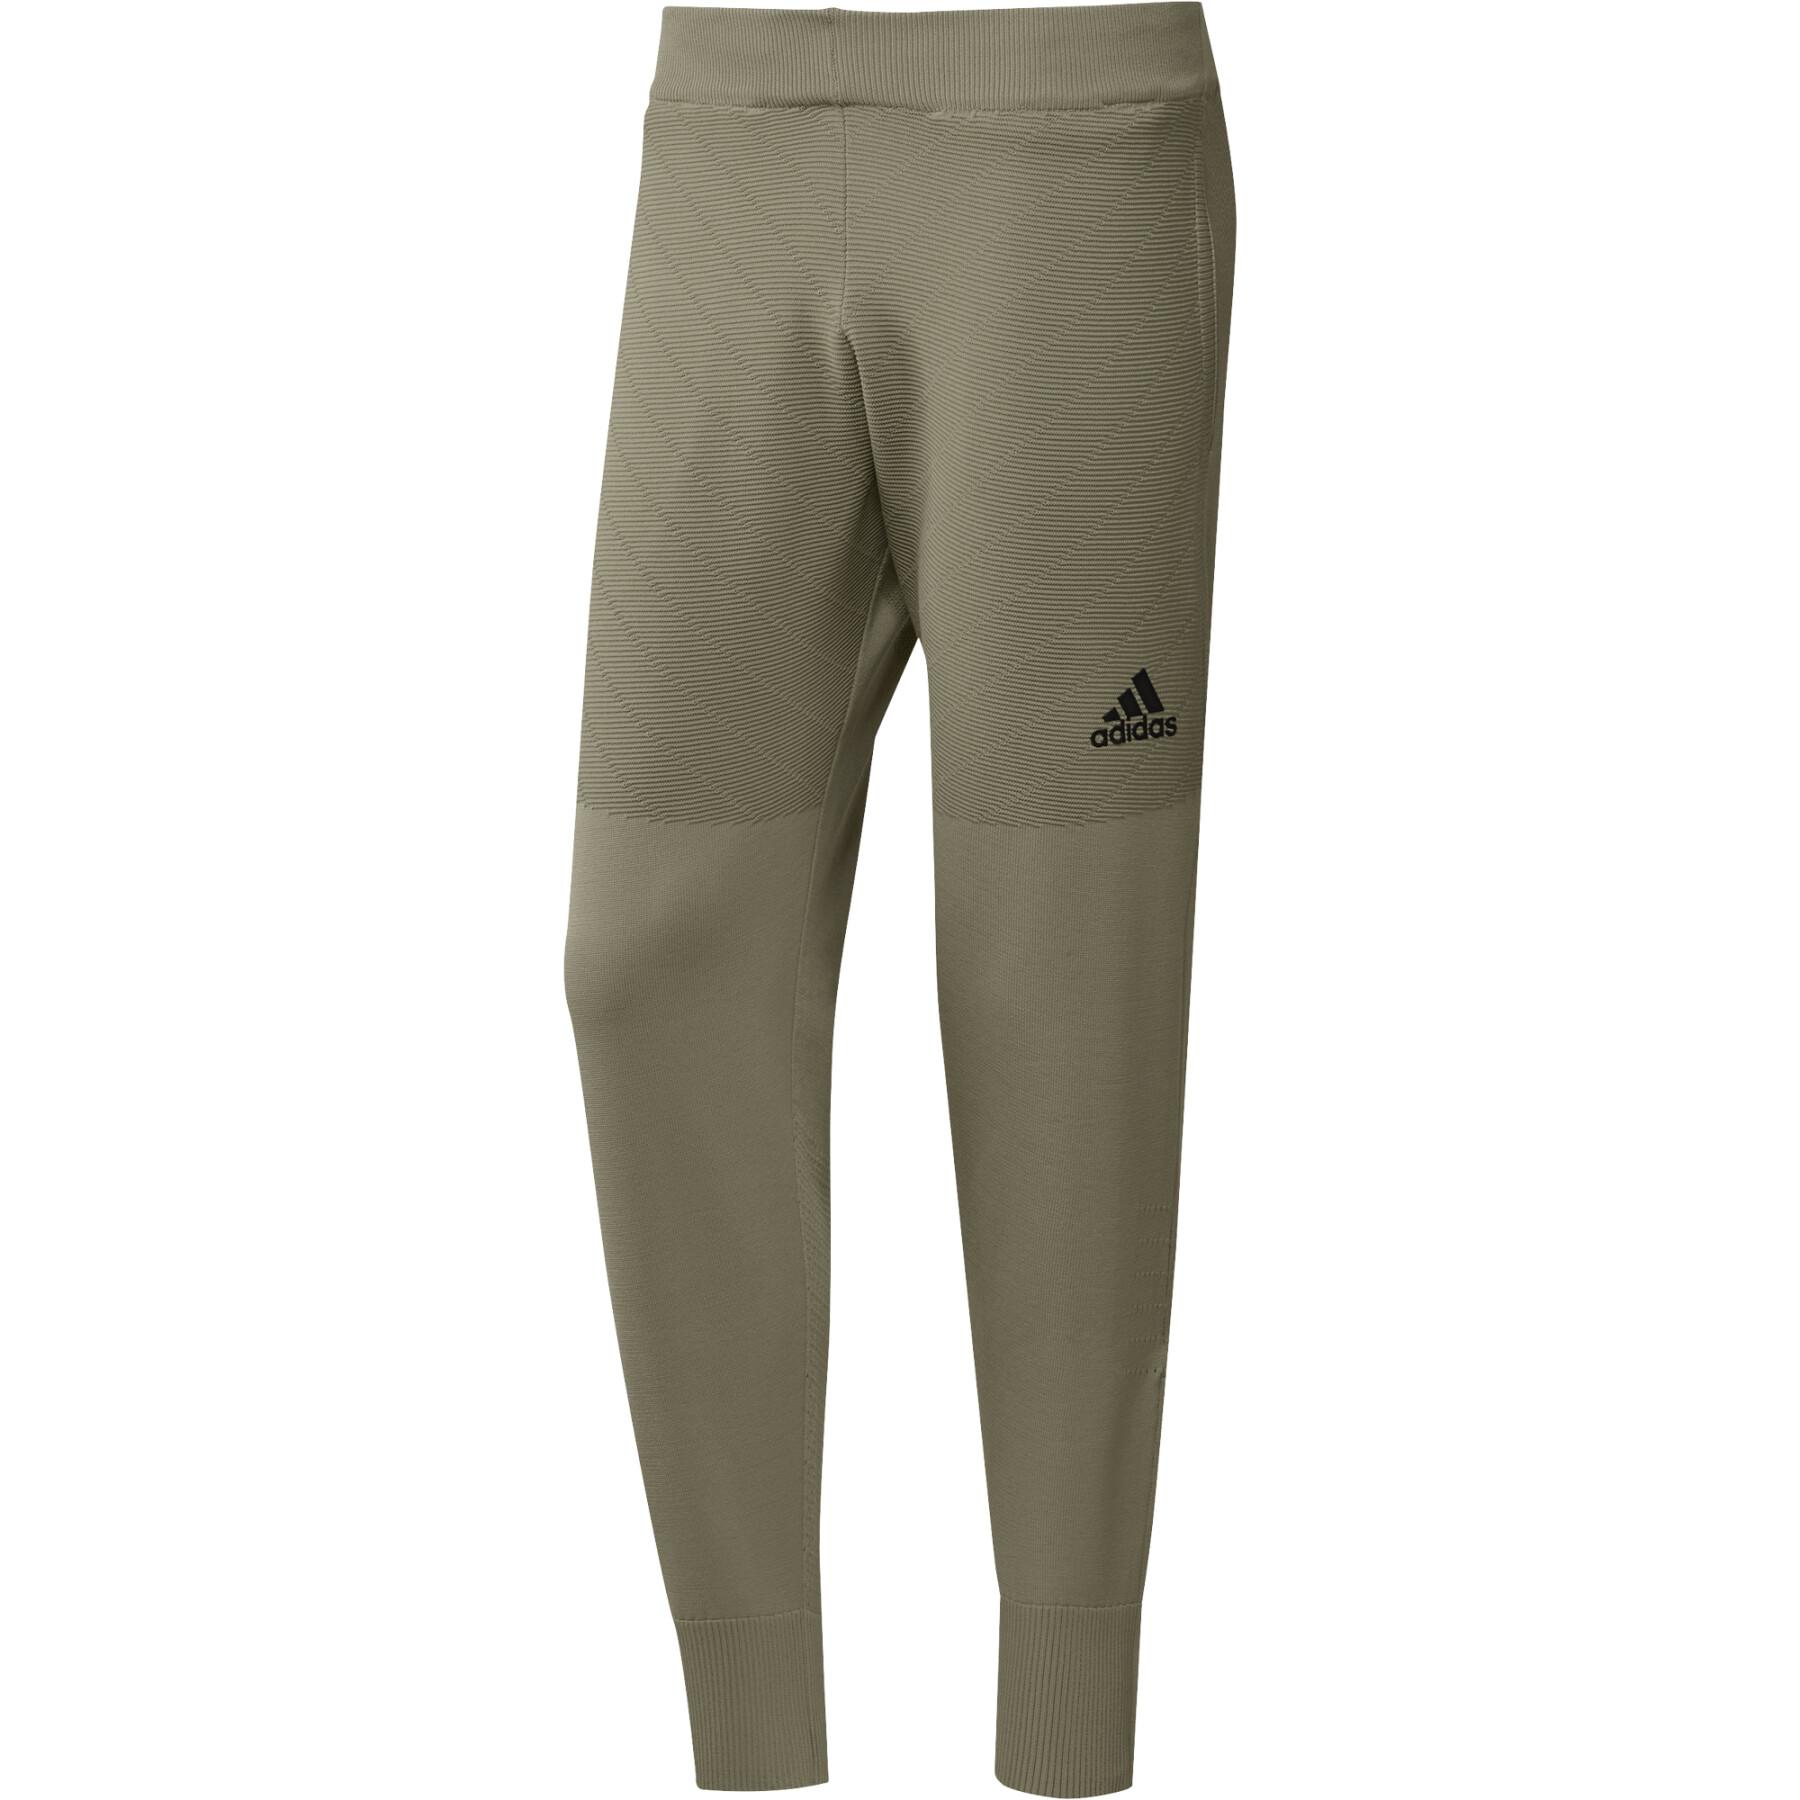 Pants adidas Tennis Primeknit